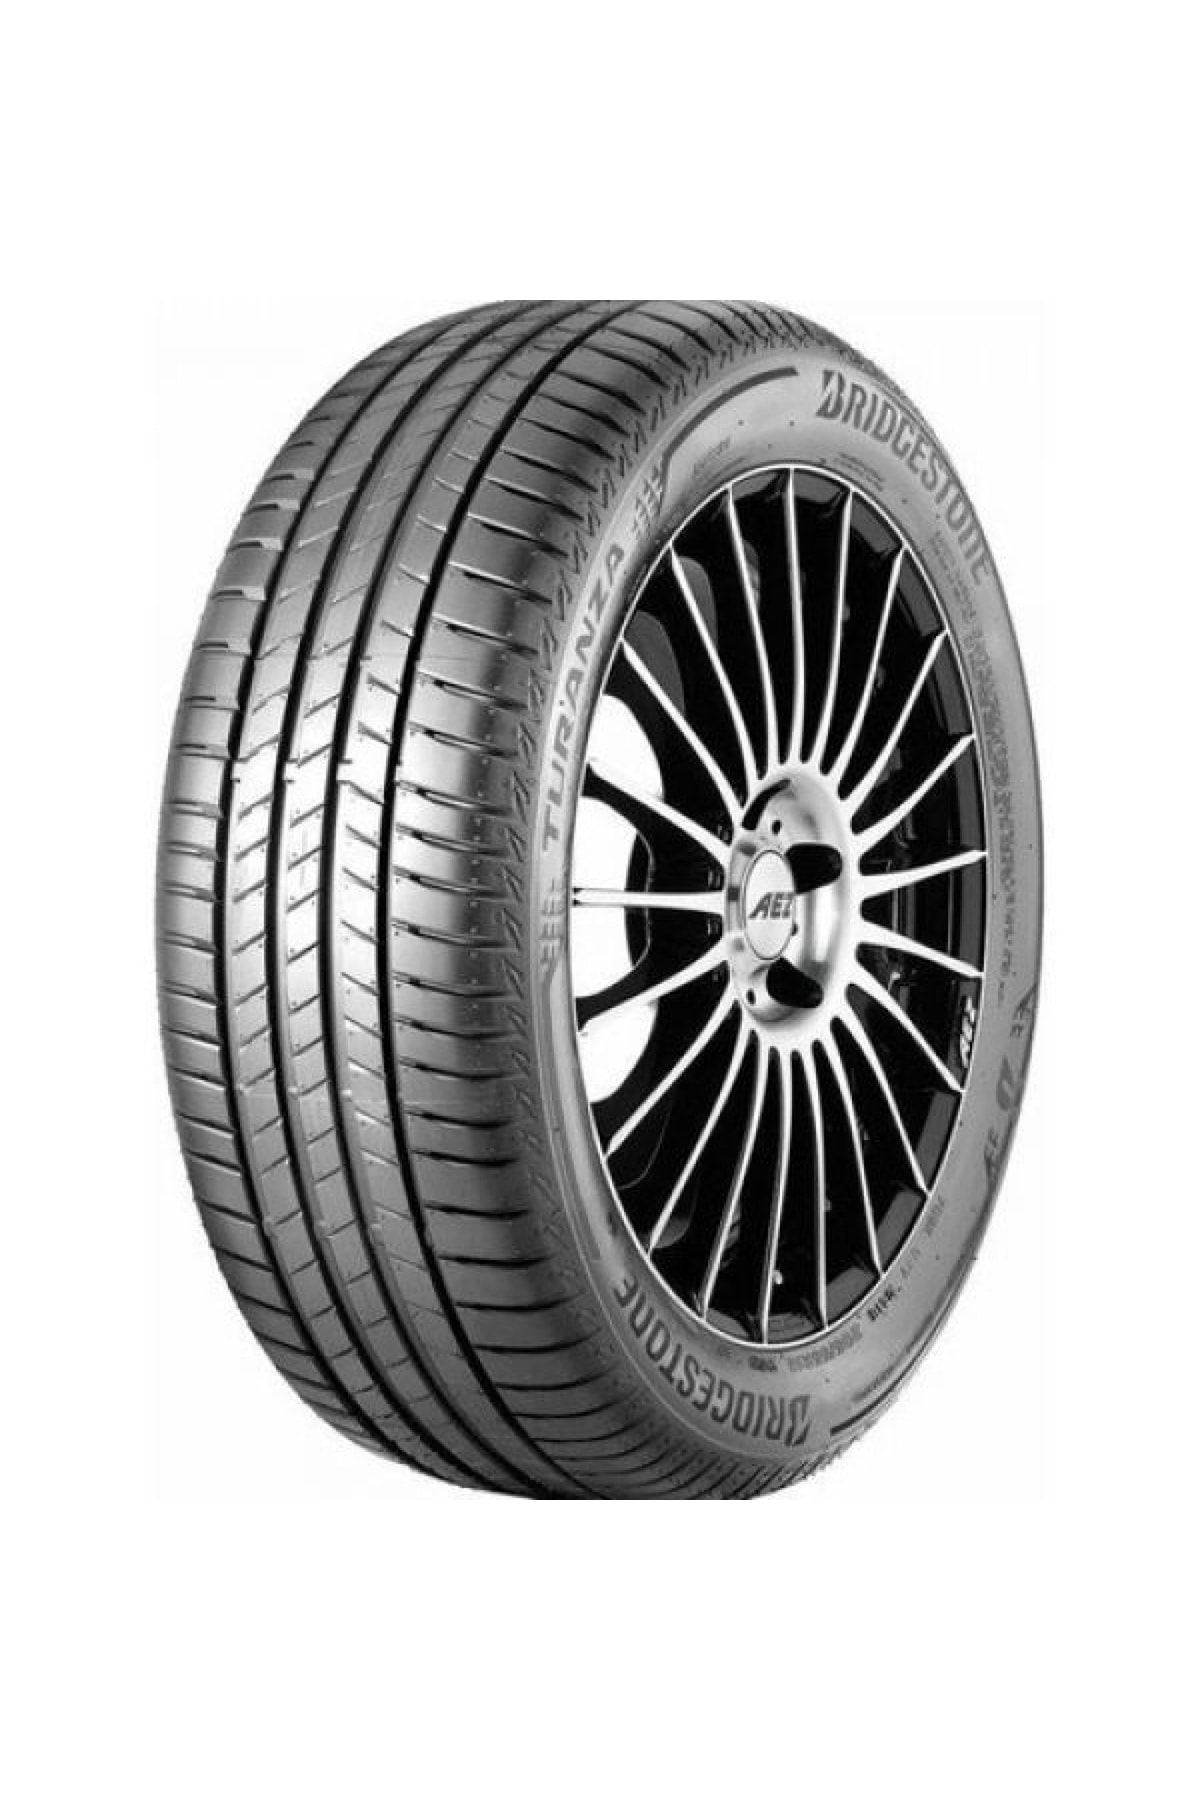 Bridgestone 225/50r17 98y Xl T005 Yüksek Performans Oto Yaz Lastiği Dot:2022 Takım Fiyatıdır